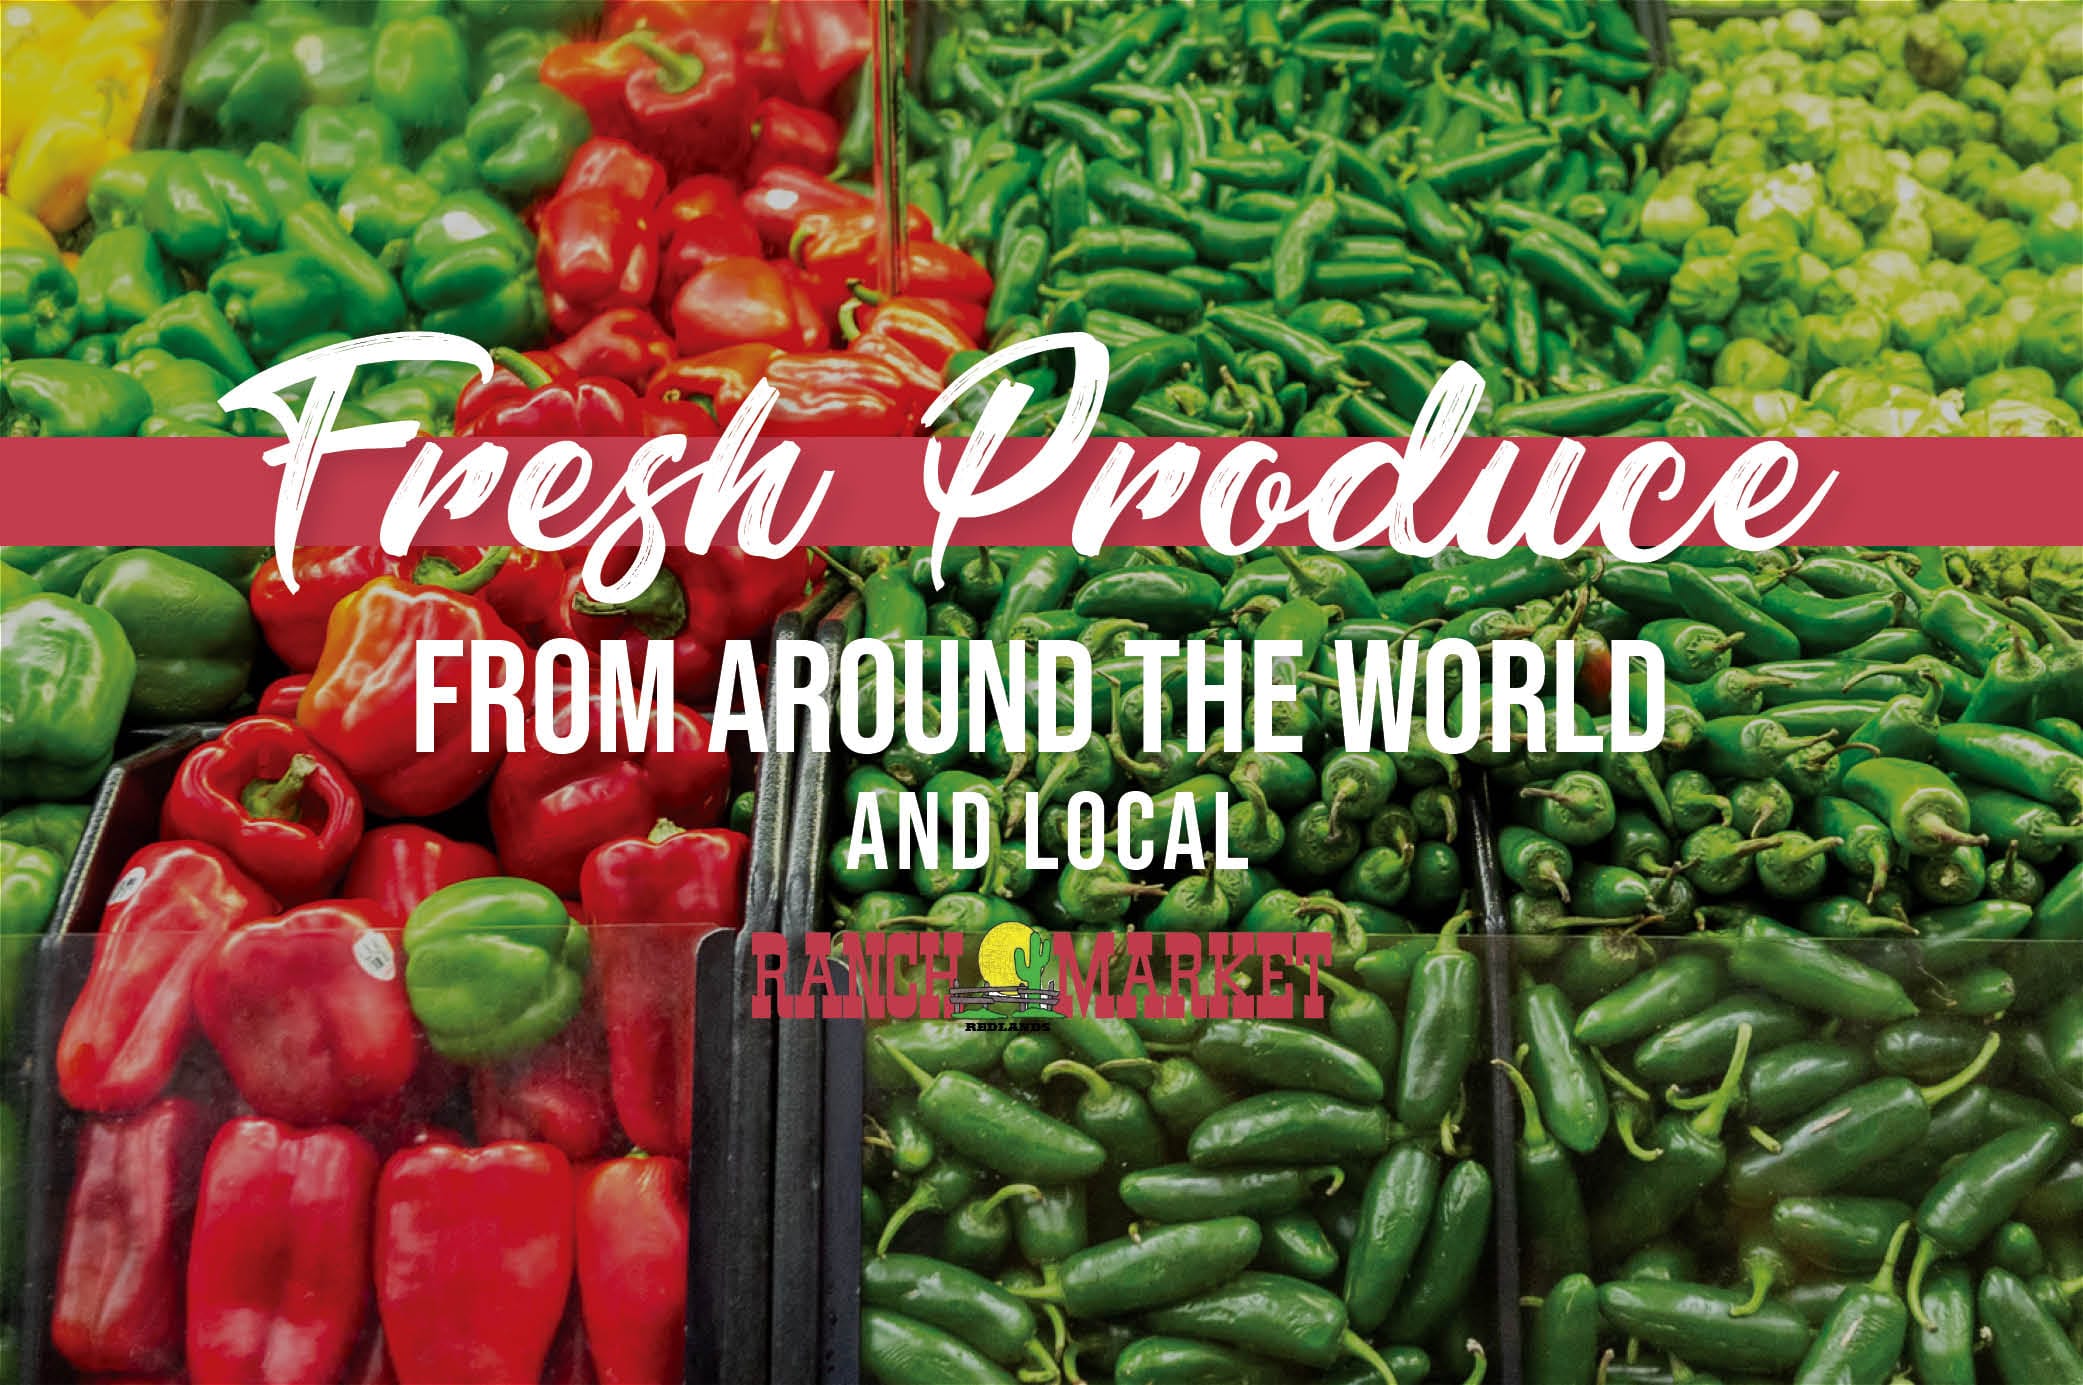 International Produce